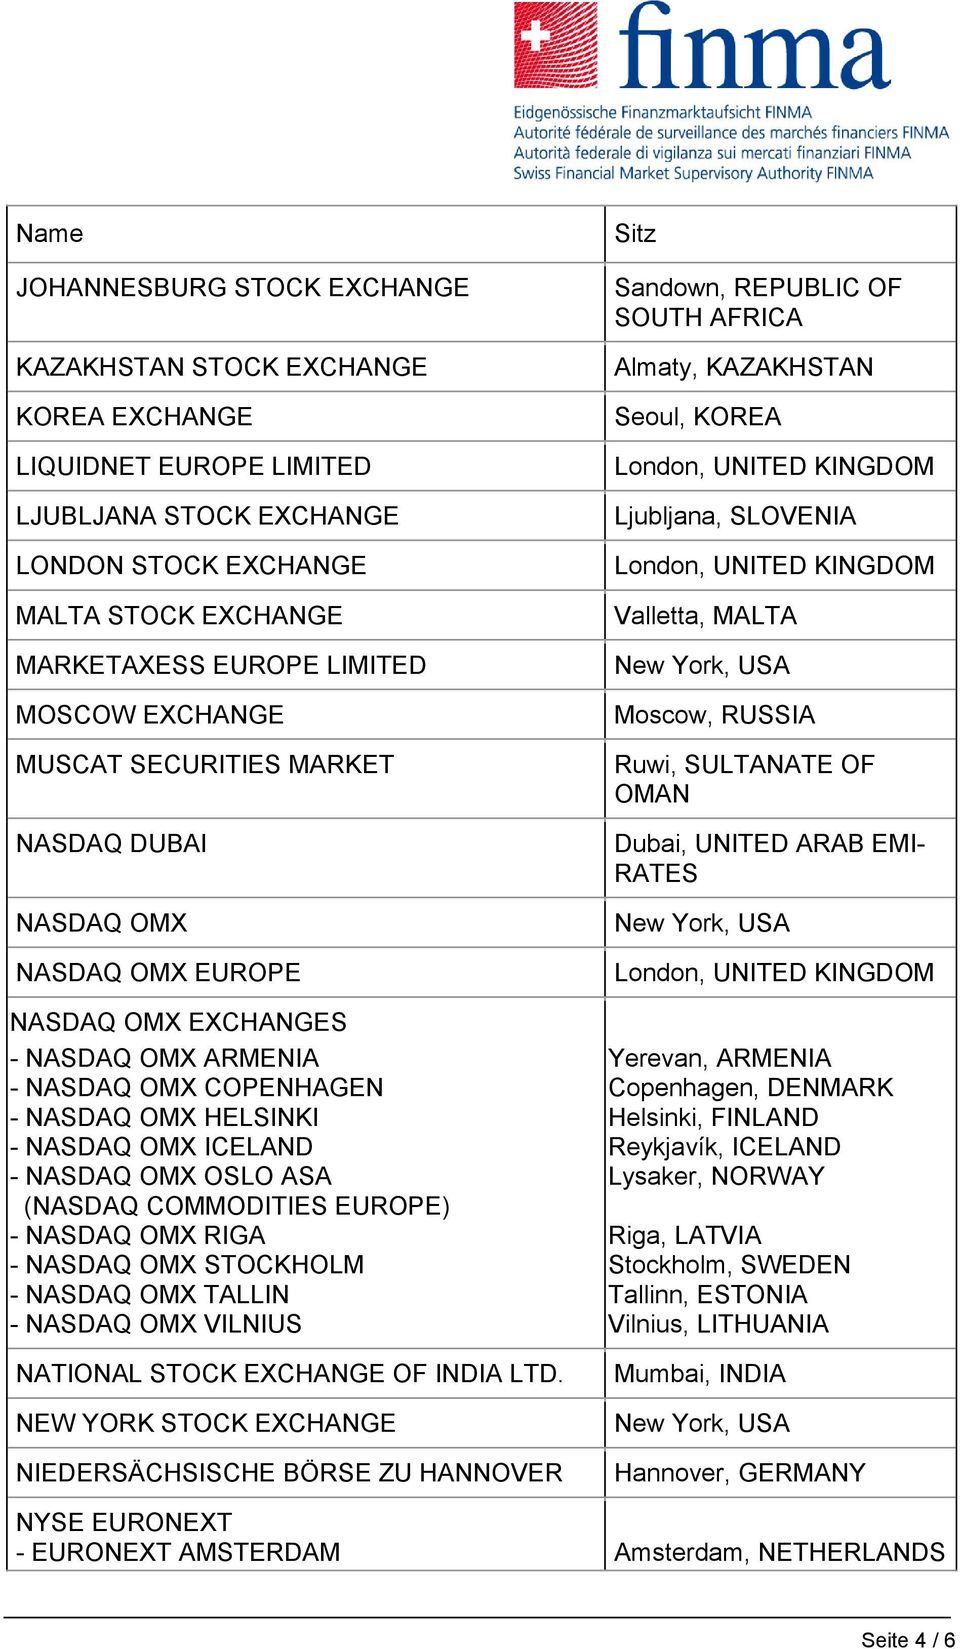 OSLO ASA (NASDAQ COMMODITIES EUROPE) - NASDAQ OMX RIGA - NASDAQ OMX STOCKHOLM - NASDAQ OMX TALLIN - NASDAQ OMX VILNIUS NATIONAL STOCK EXCHANGE OF INDIA LTD.